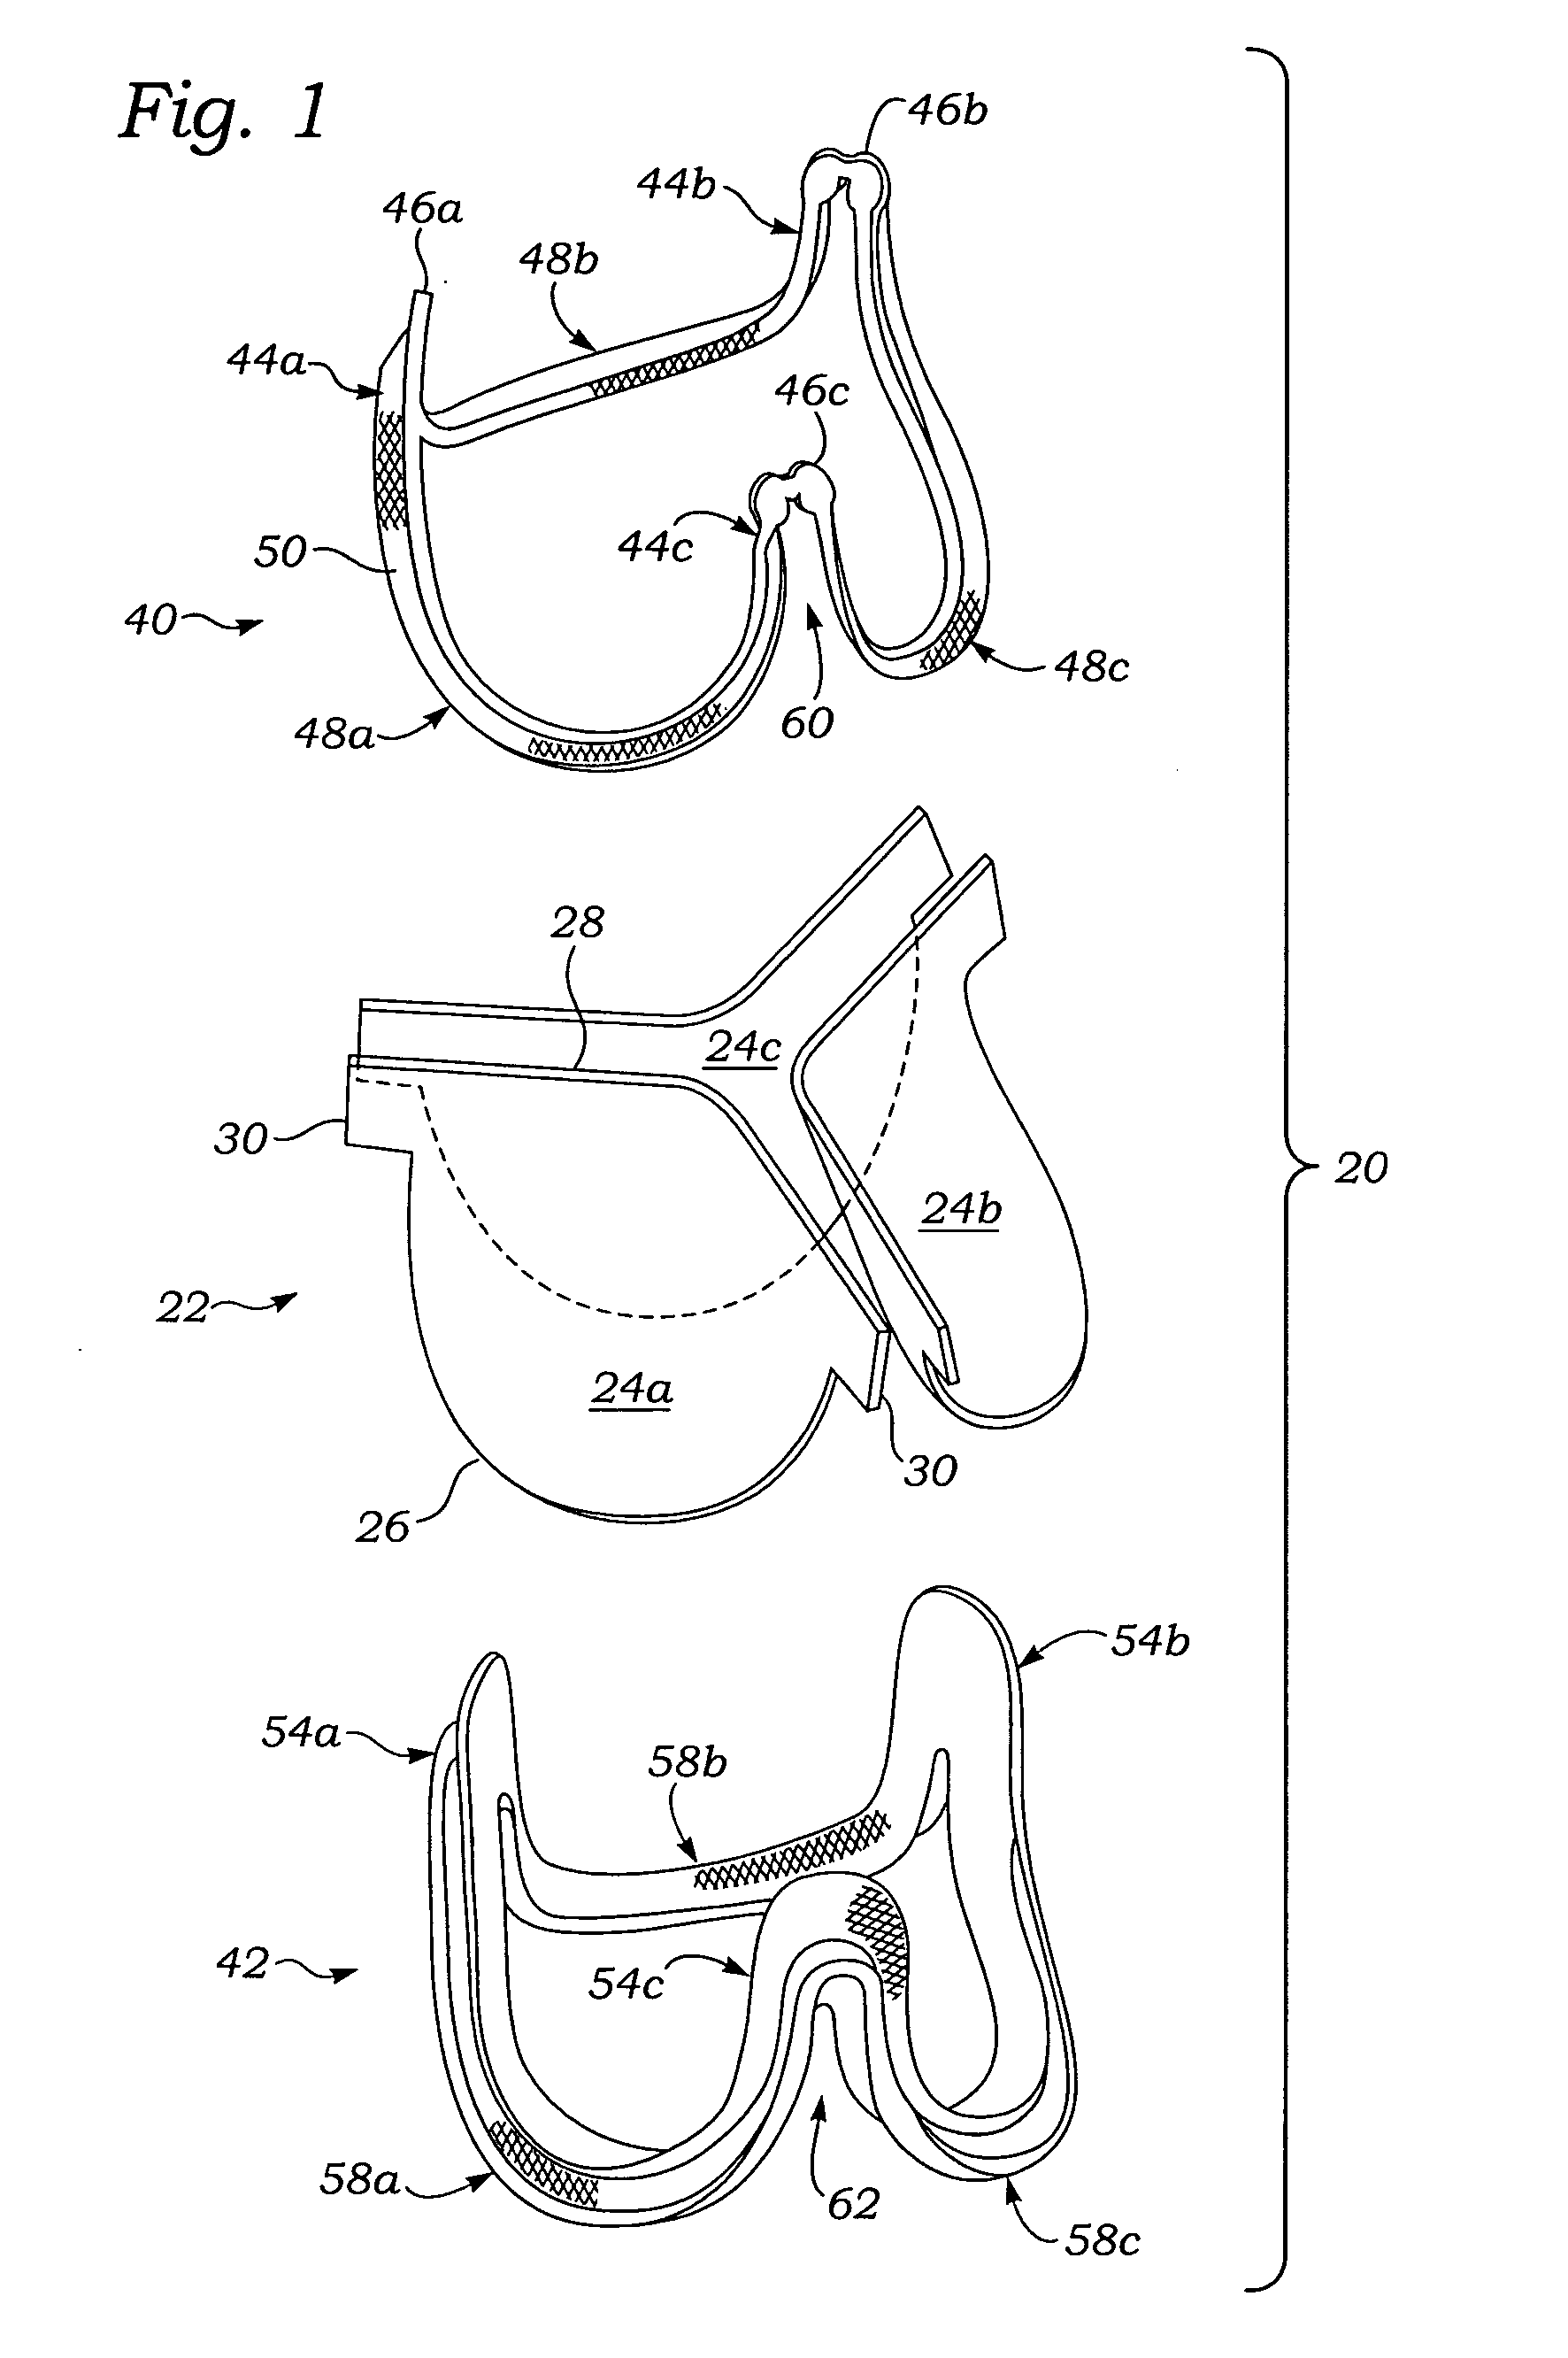 Controlled separation heart valve frame